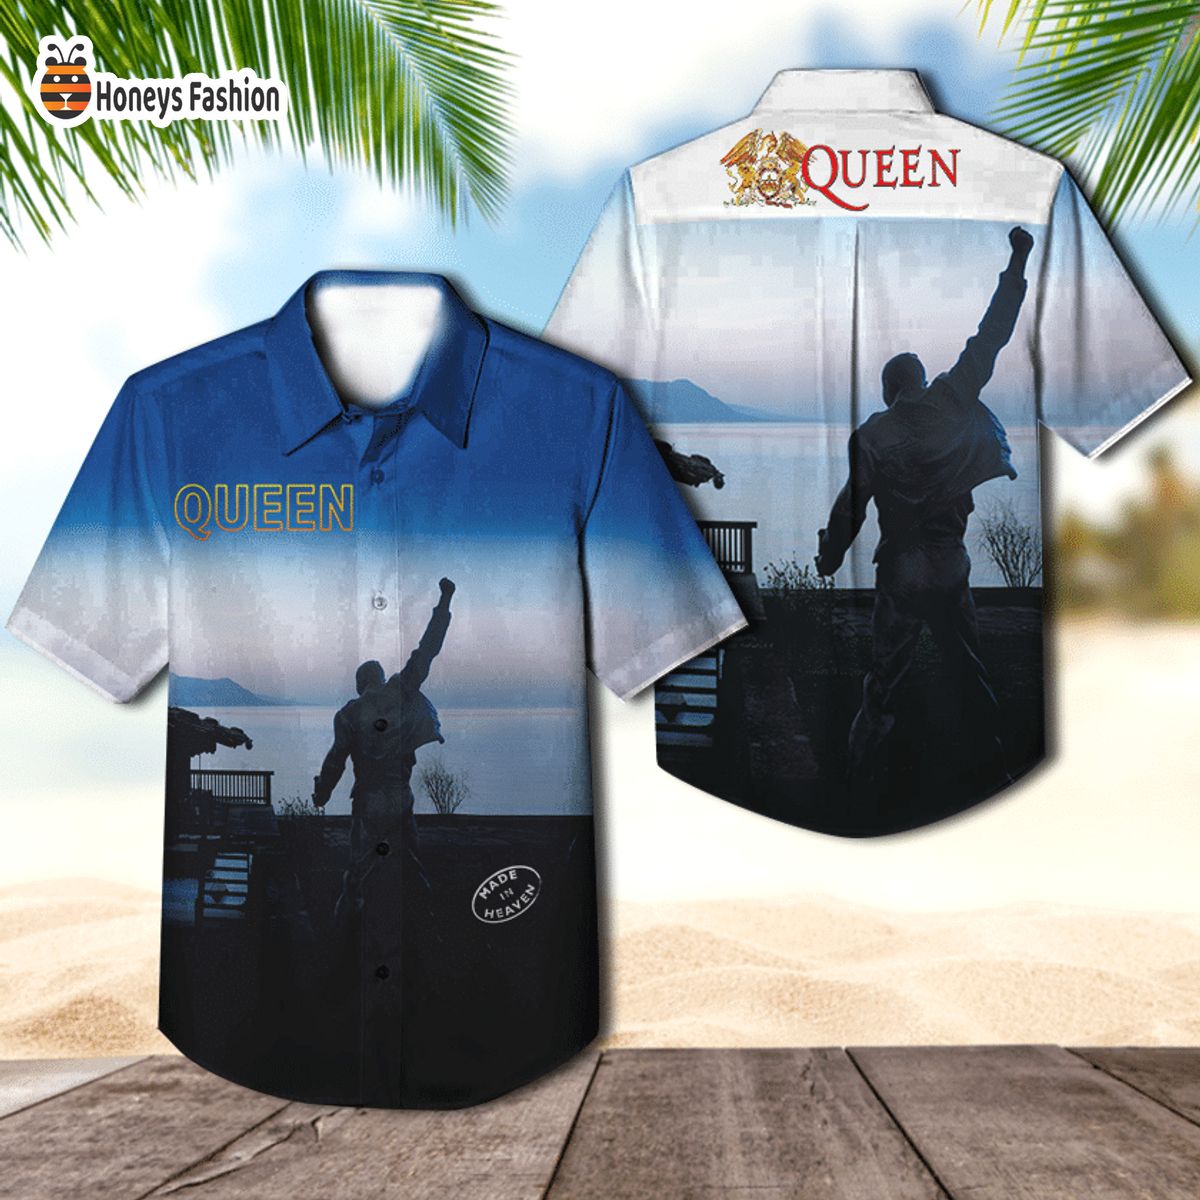 Queen band made in heaven album cover hawaiian shirt